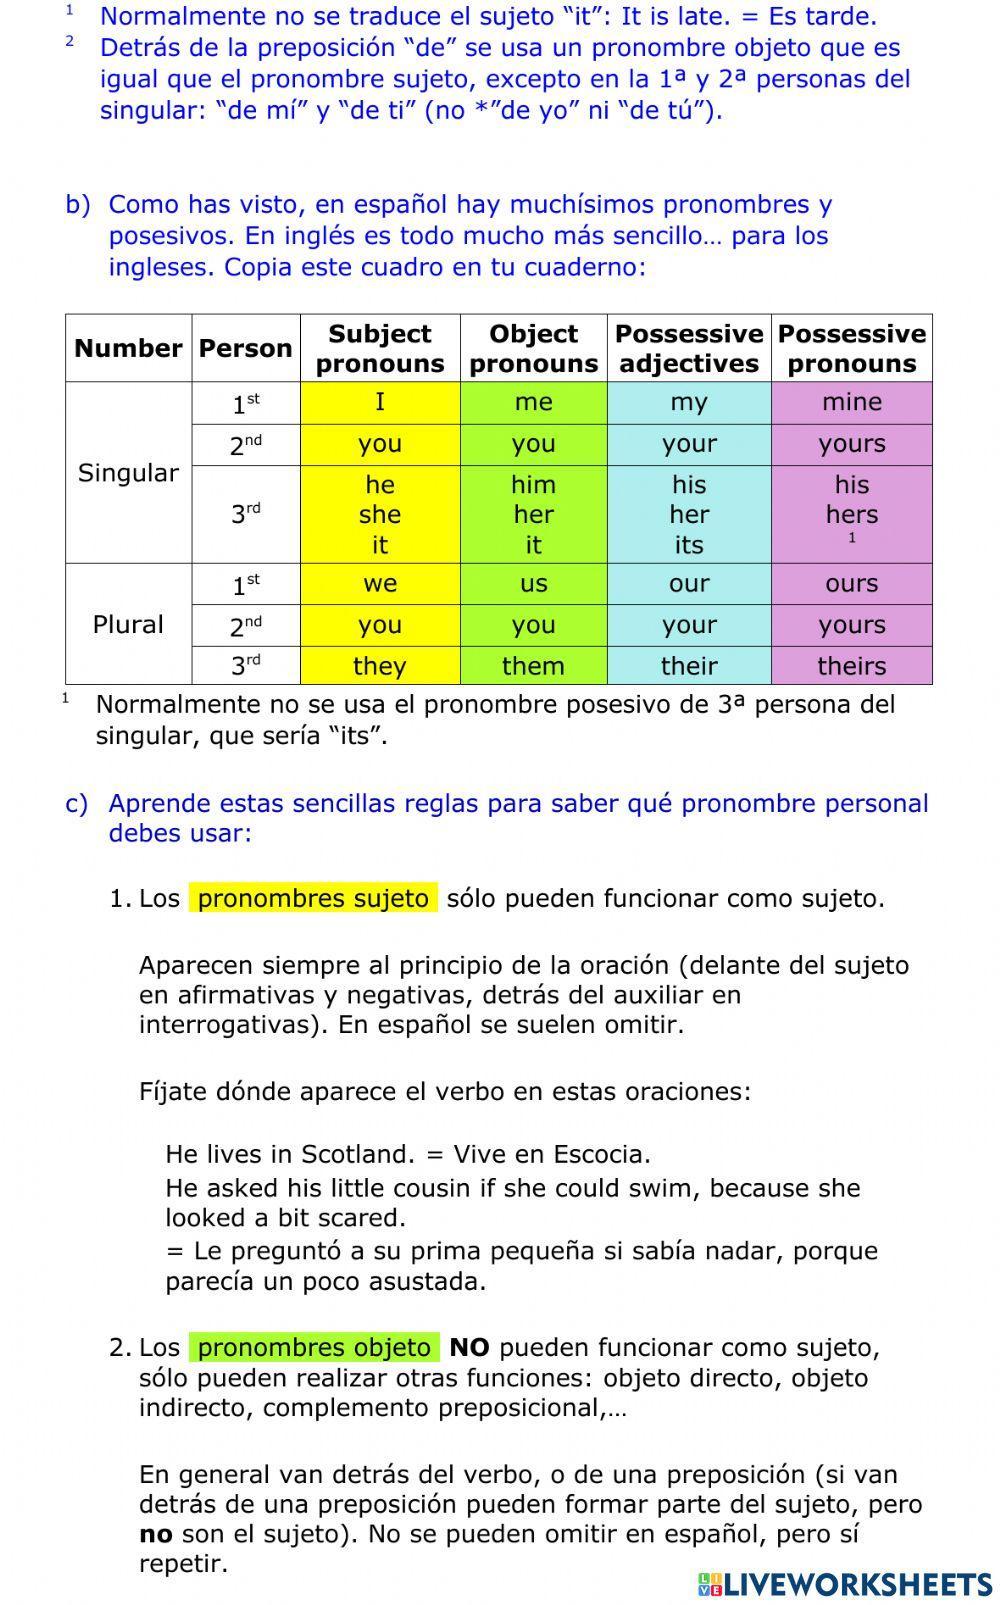 Personal pronouns and possessives